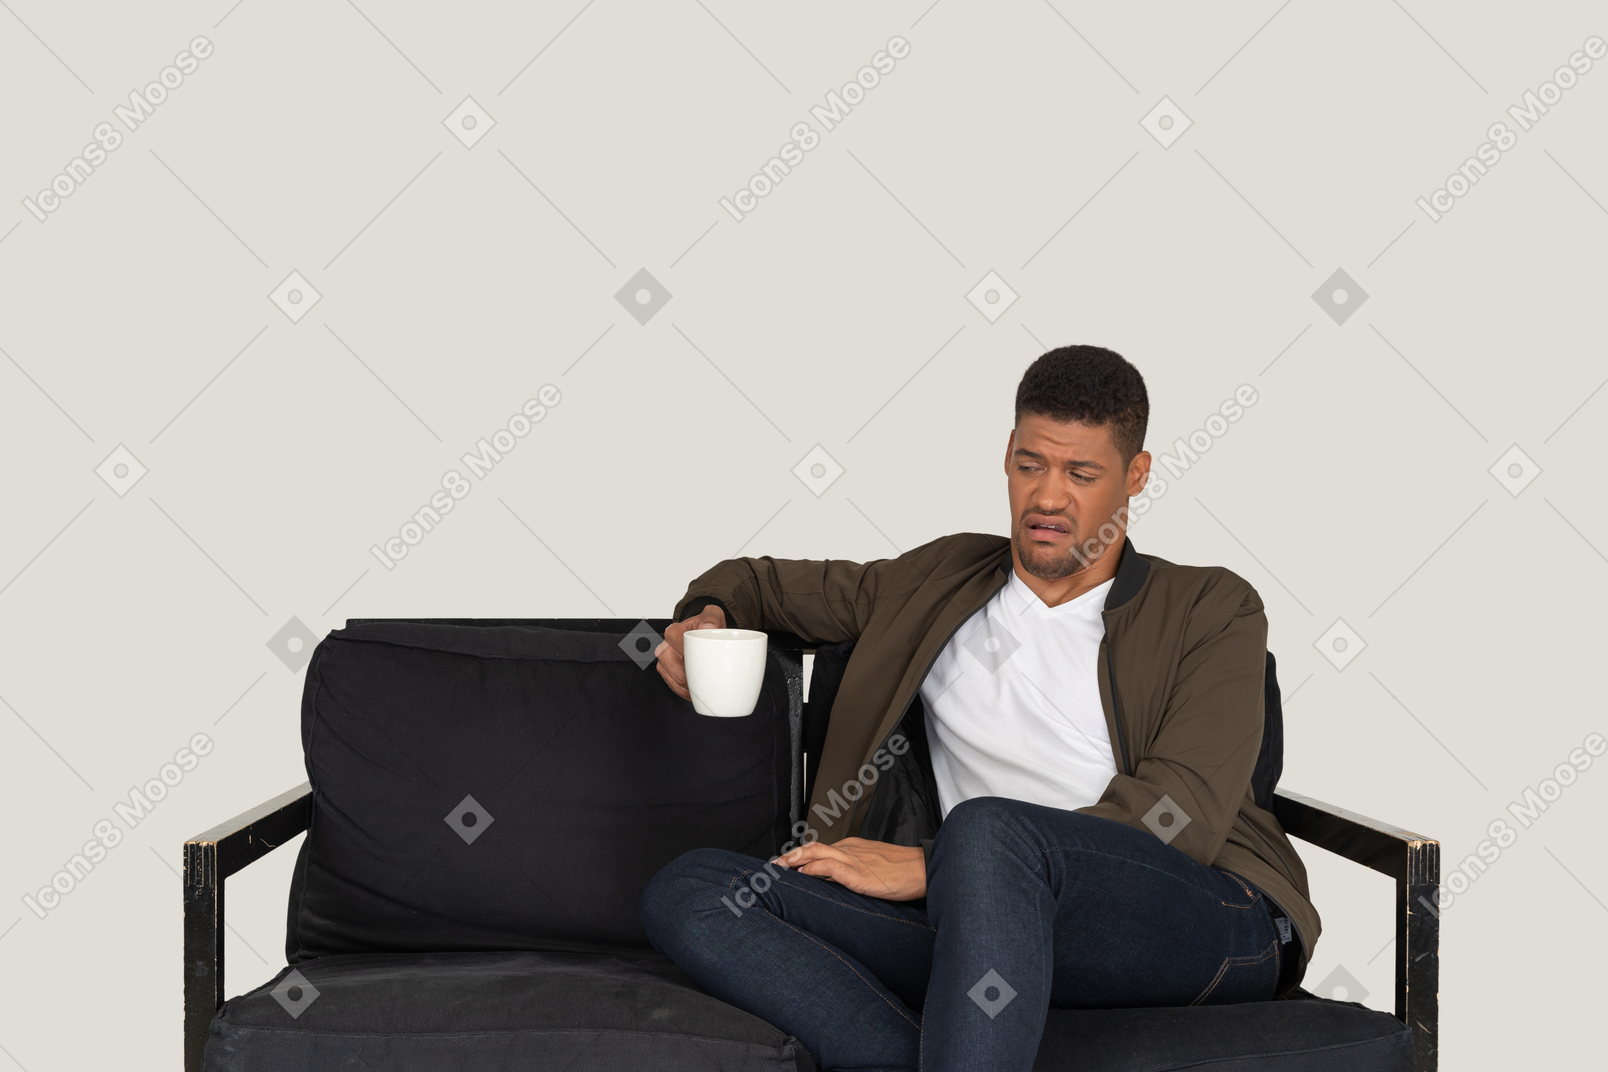 Вид спереди молодого гримасничающего человека, сидящего на диване с чашкой кофе